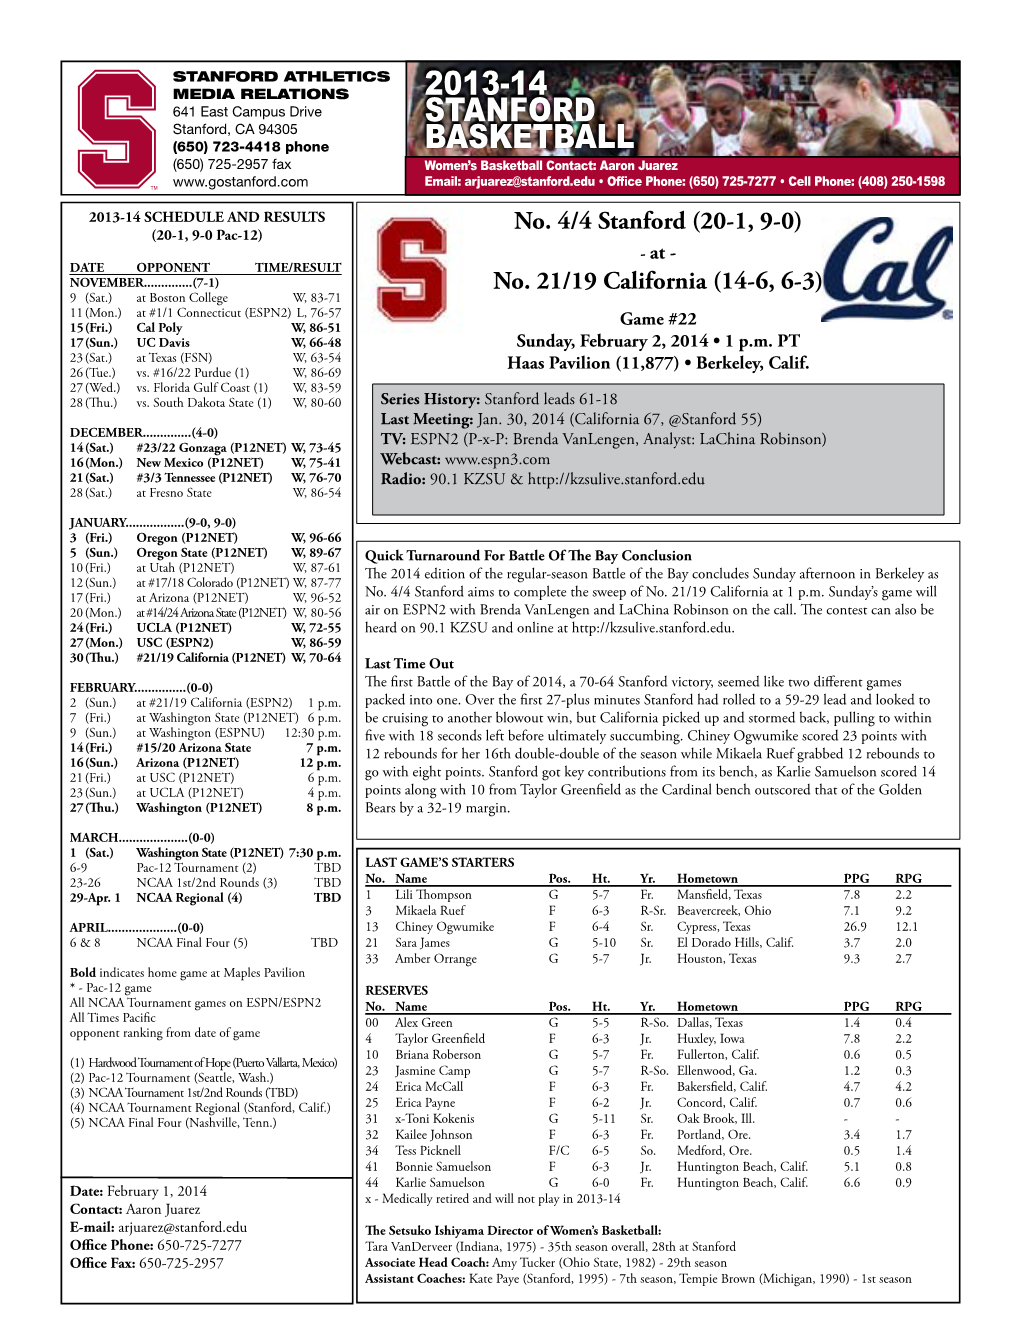 2013-14 Stanford Basketball